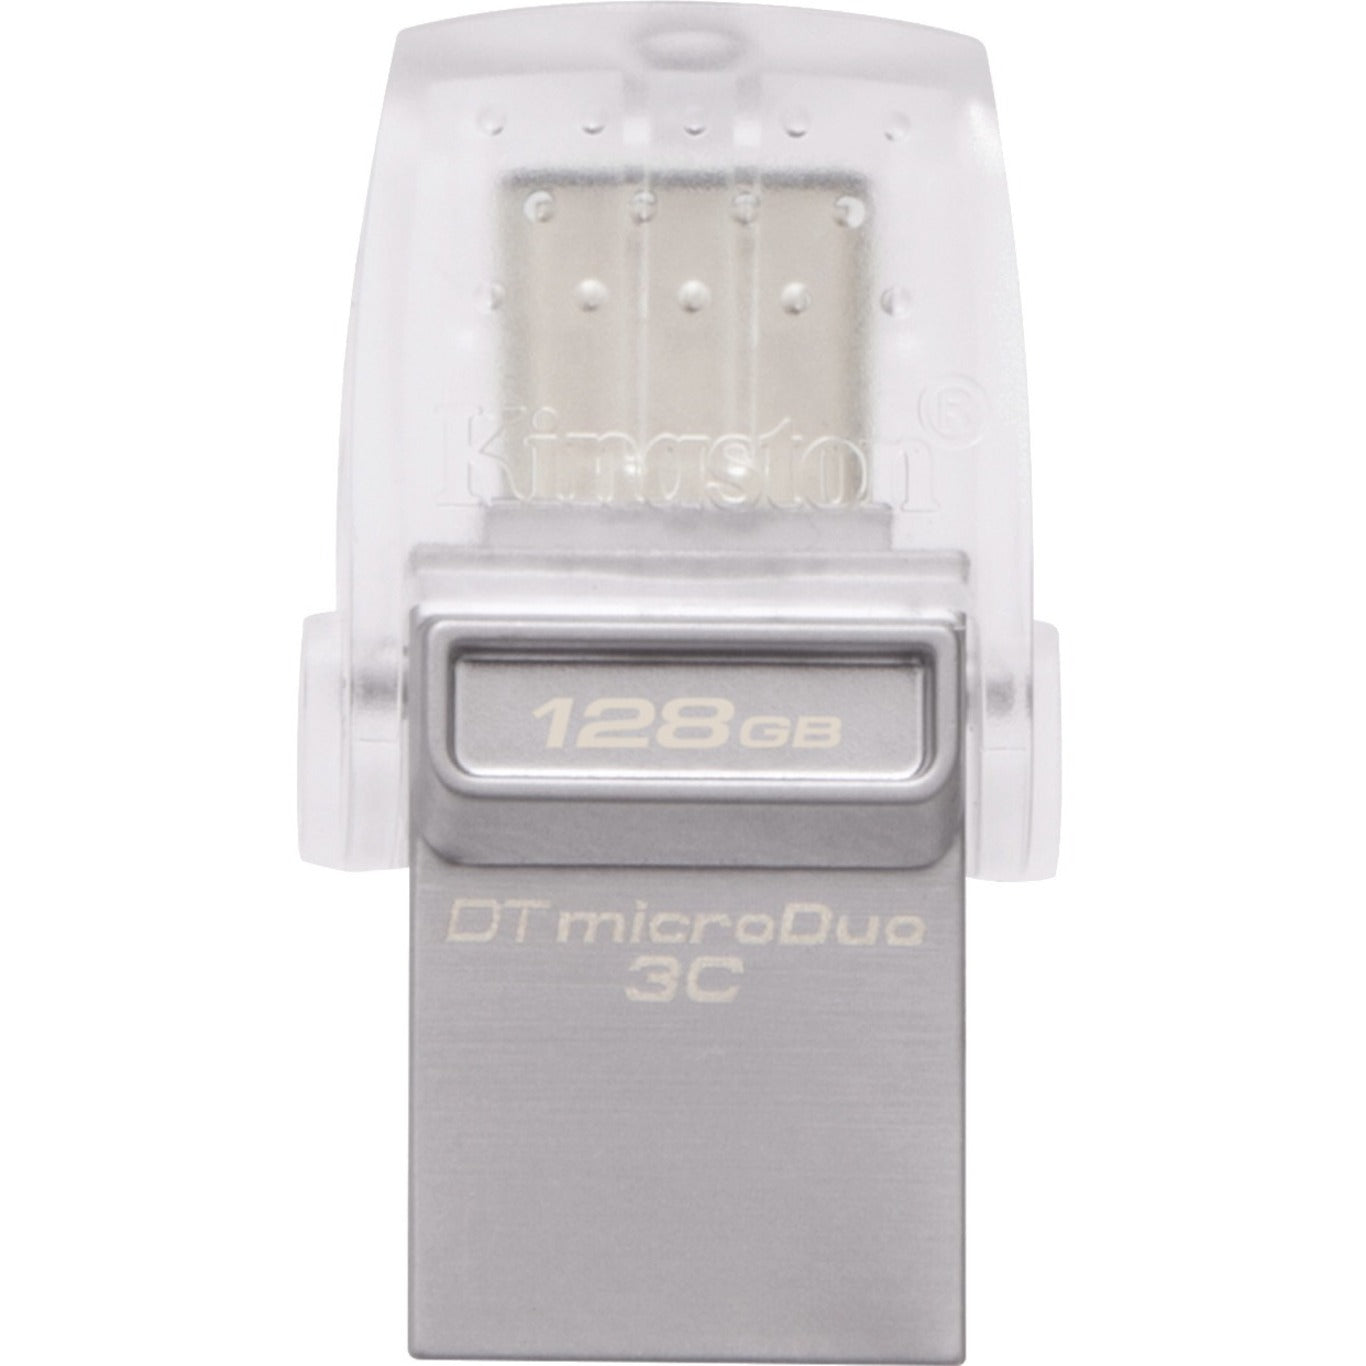 Kingston DTDUO3C/128GB DataTraveler microDuo 3C USB Flash Drive, 128GB Storage Capacity